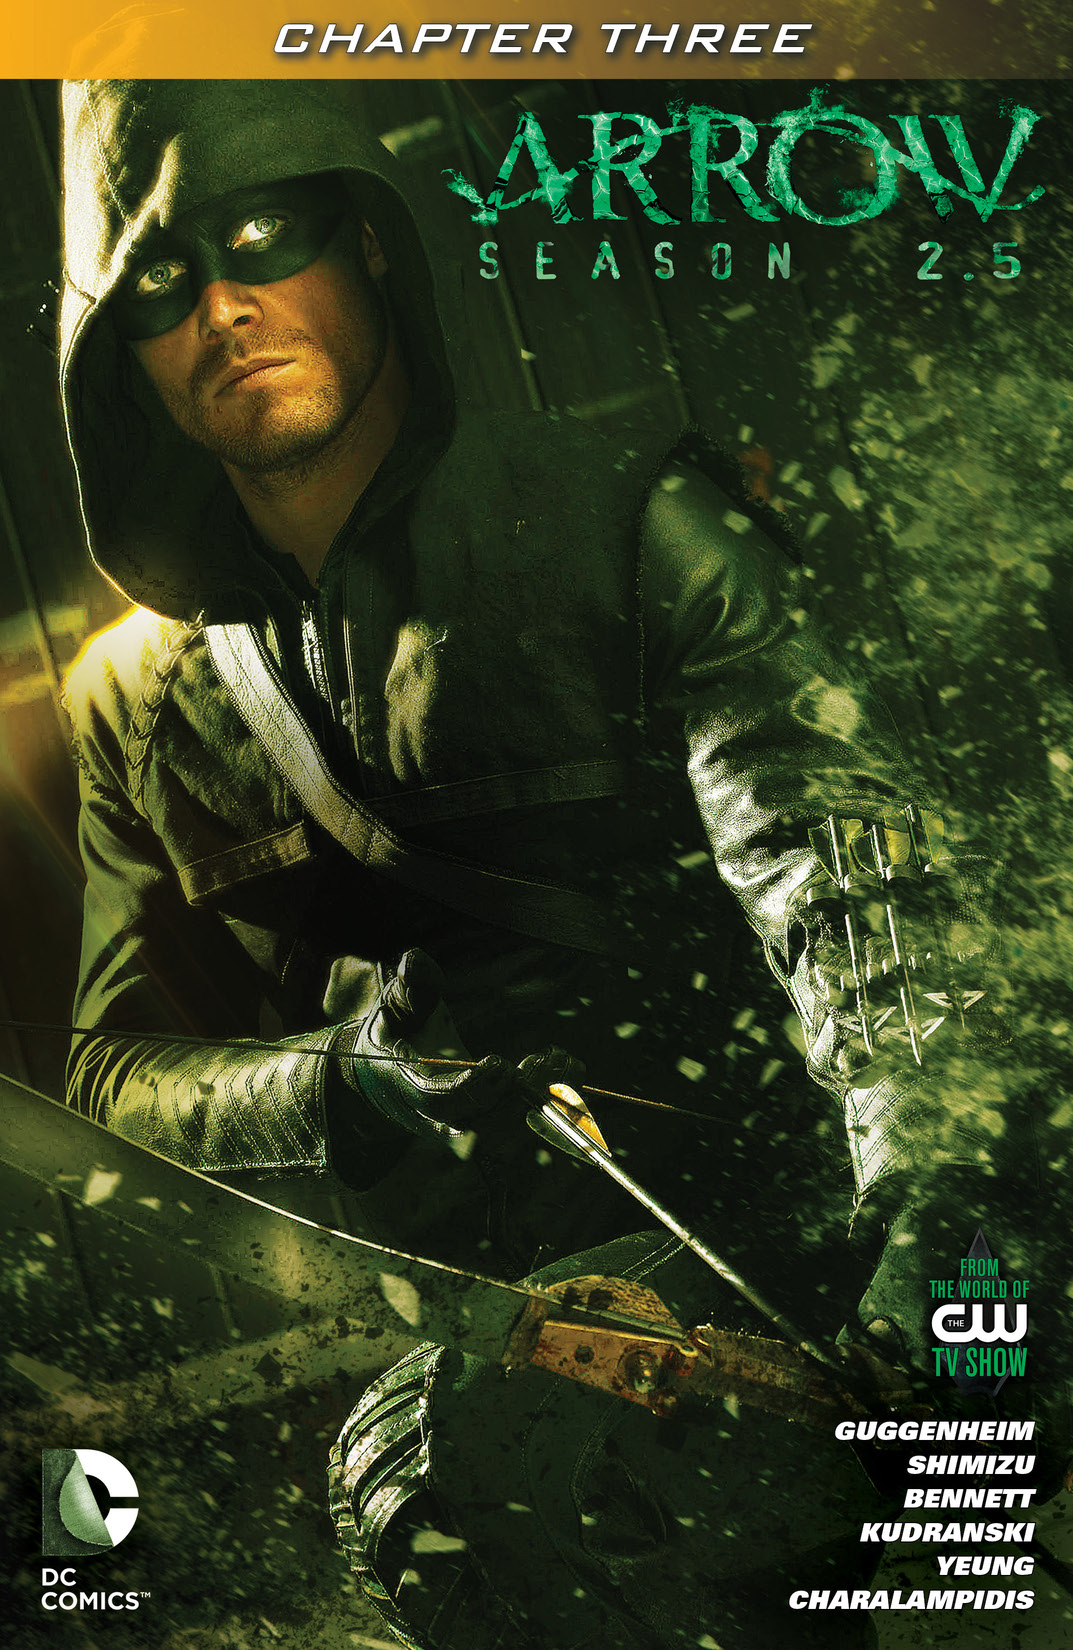 Arrow: Season 2.5 #3 preview images